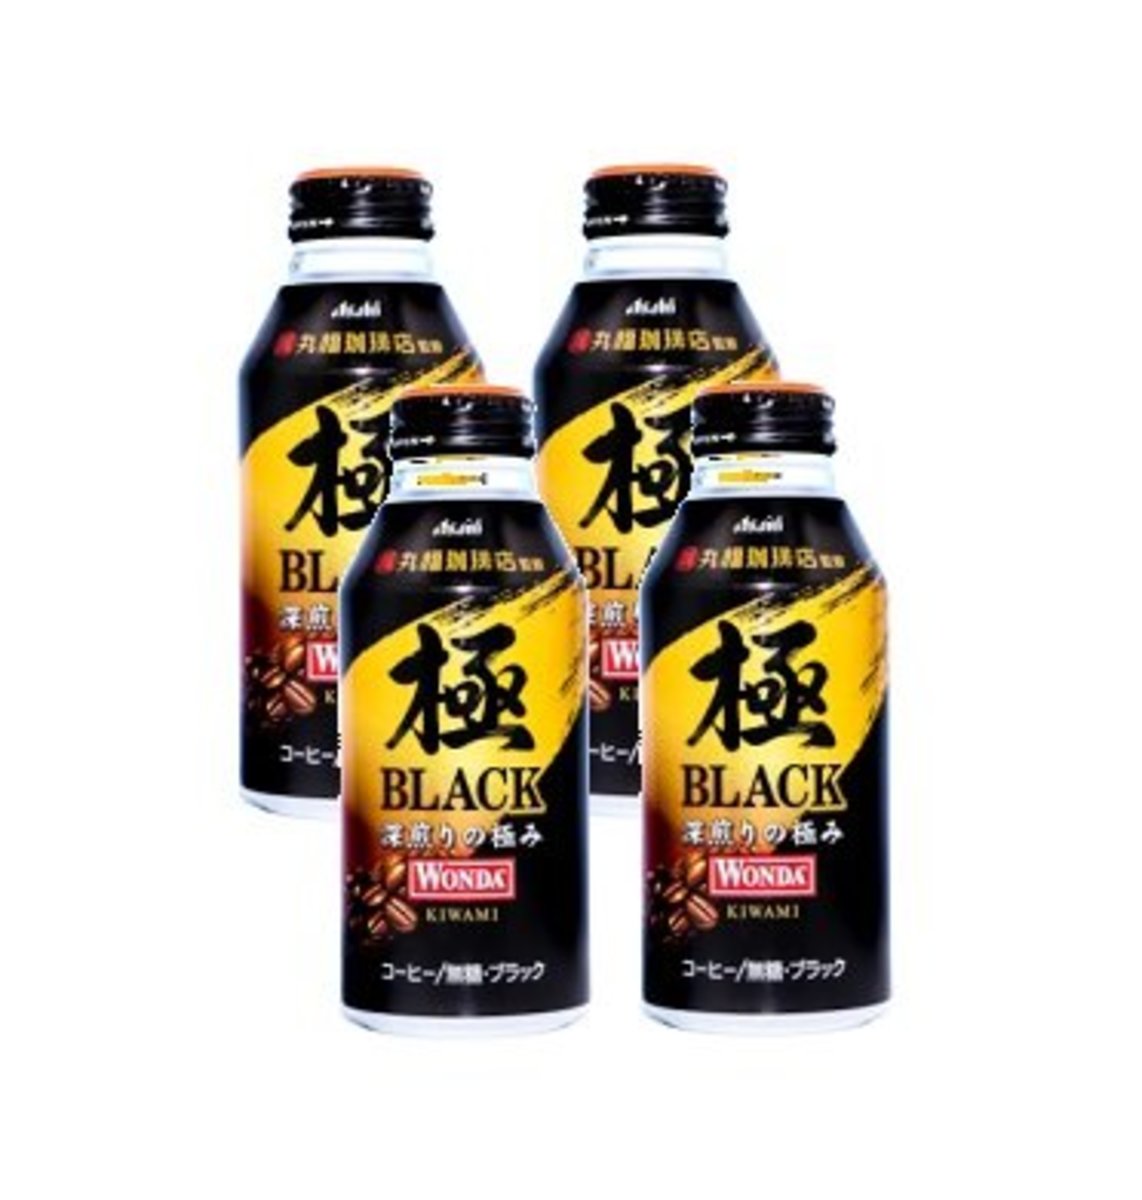 Asahi | Wonda Black Coffee 400g x 4 cans | HKTVmall The Largest HK